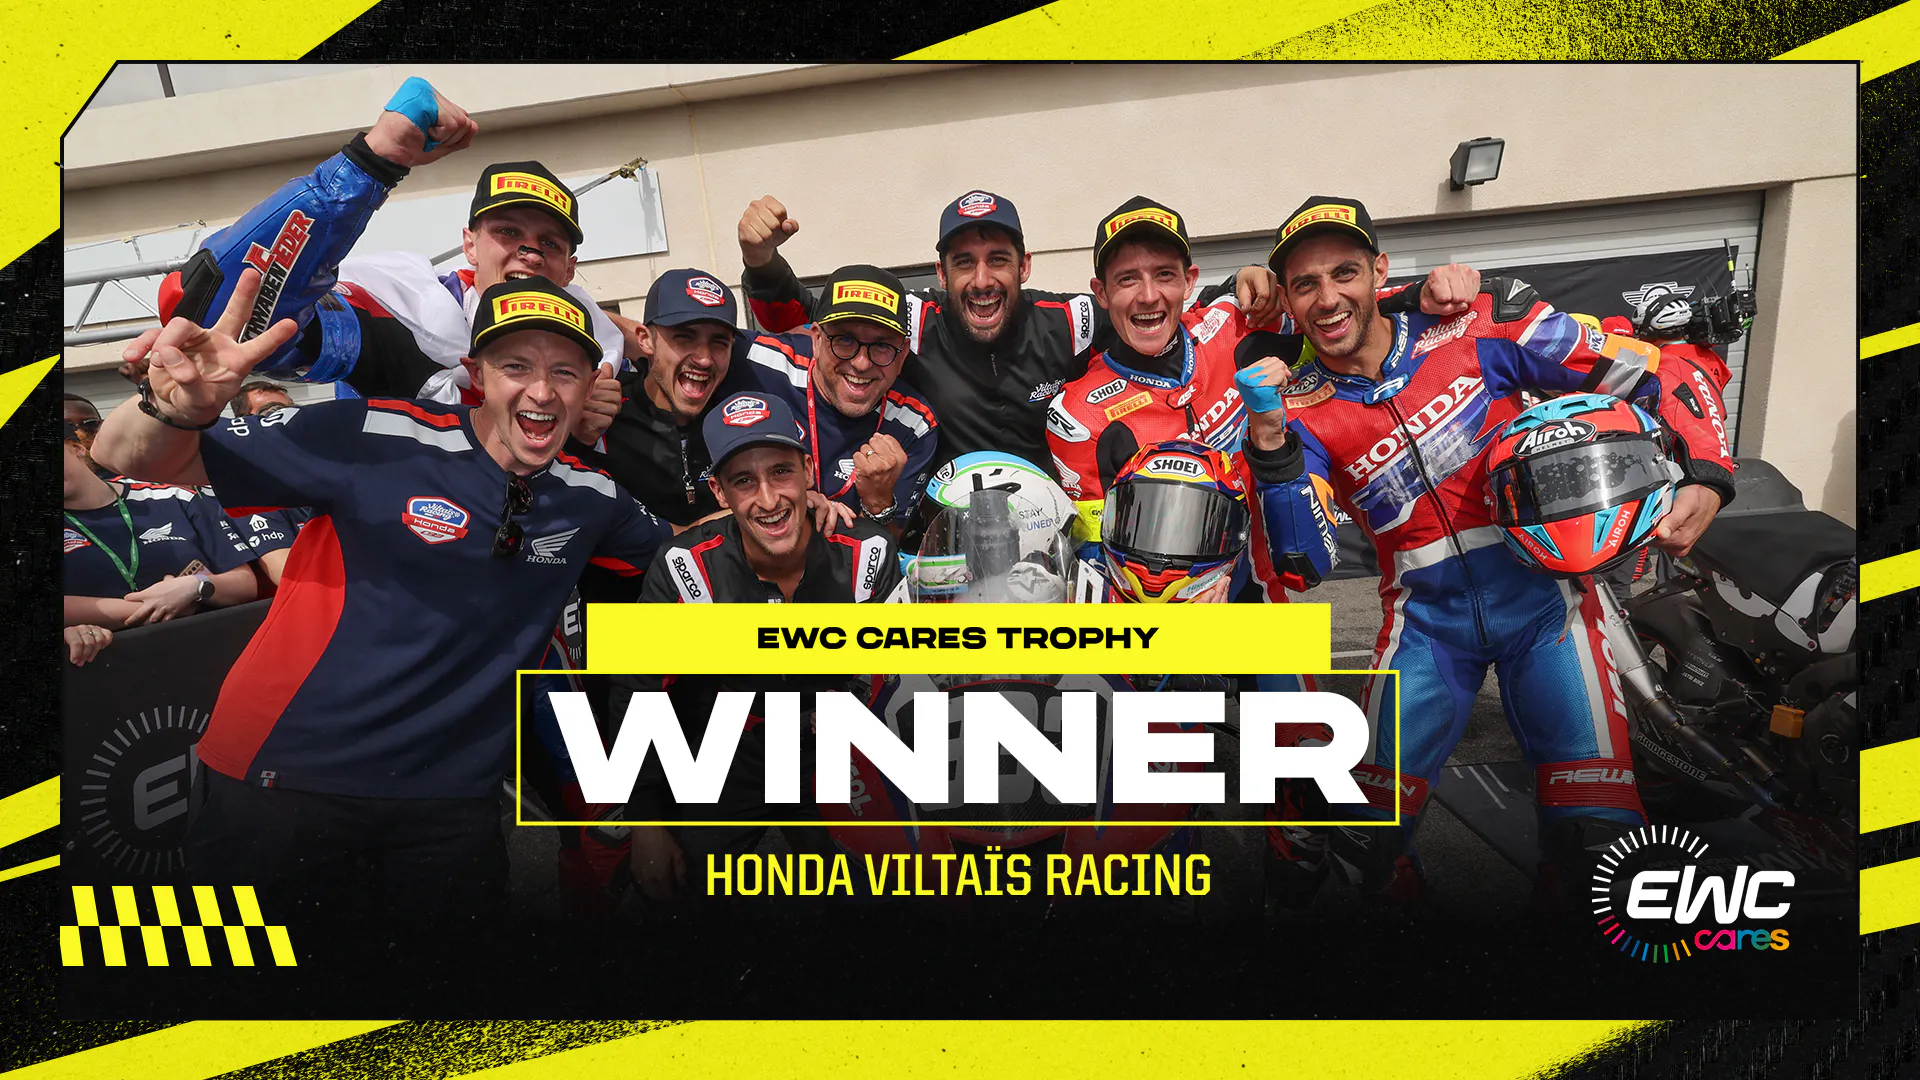 Honda Viltaïs Racing贏得首屆FIM EWC Cares獎杯